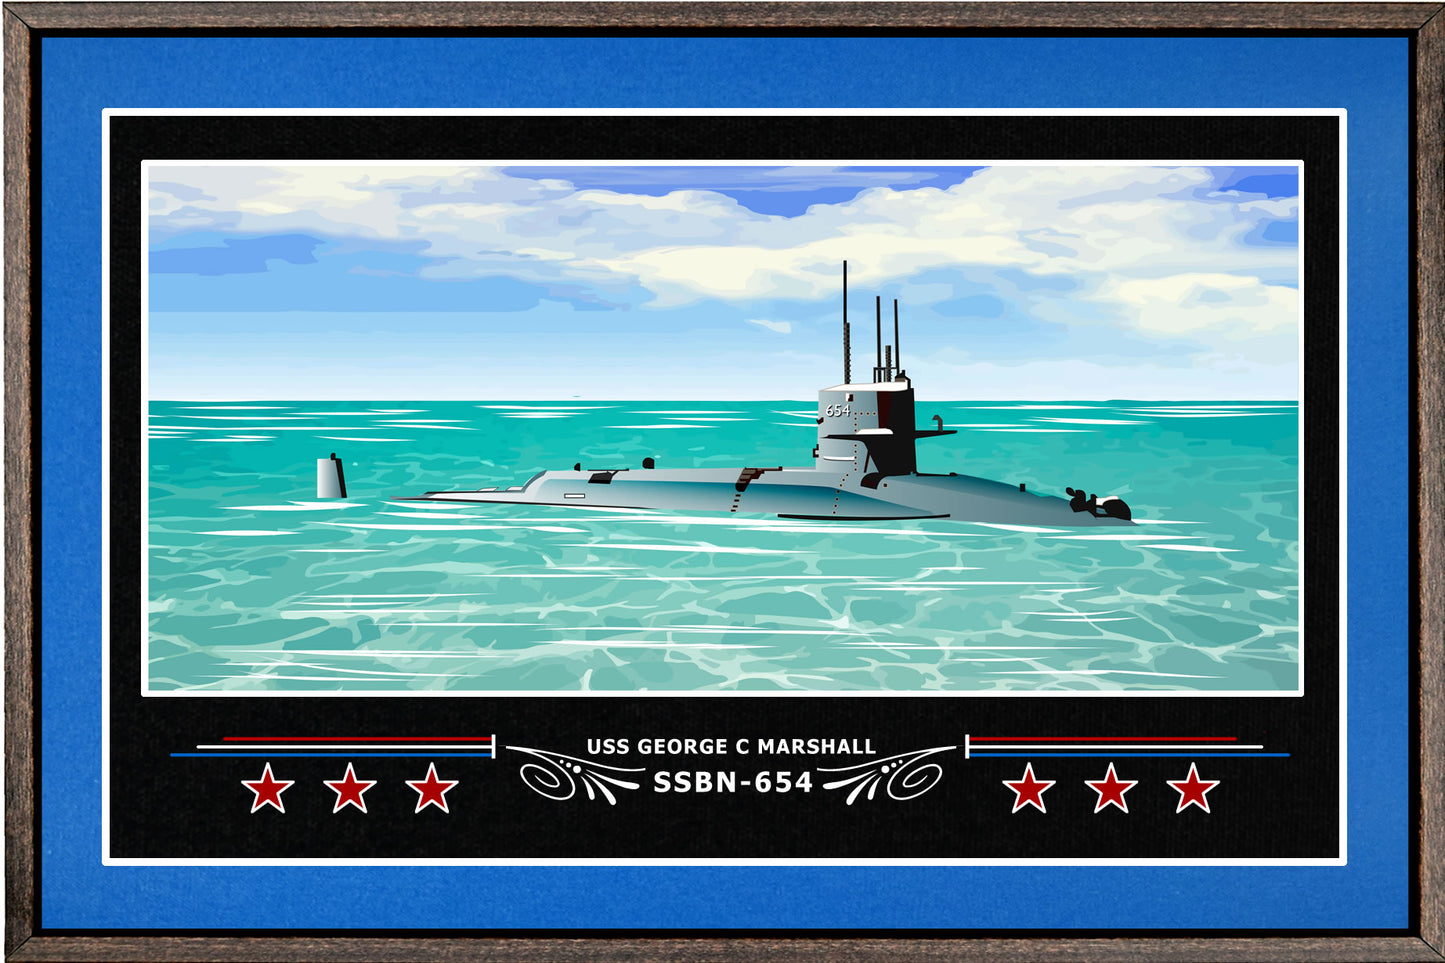 USS GEORGE C MARSHALL SSBN 654 BOX FRAMED CANVAS ART BLUE